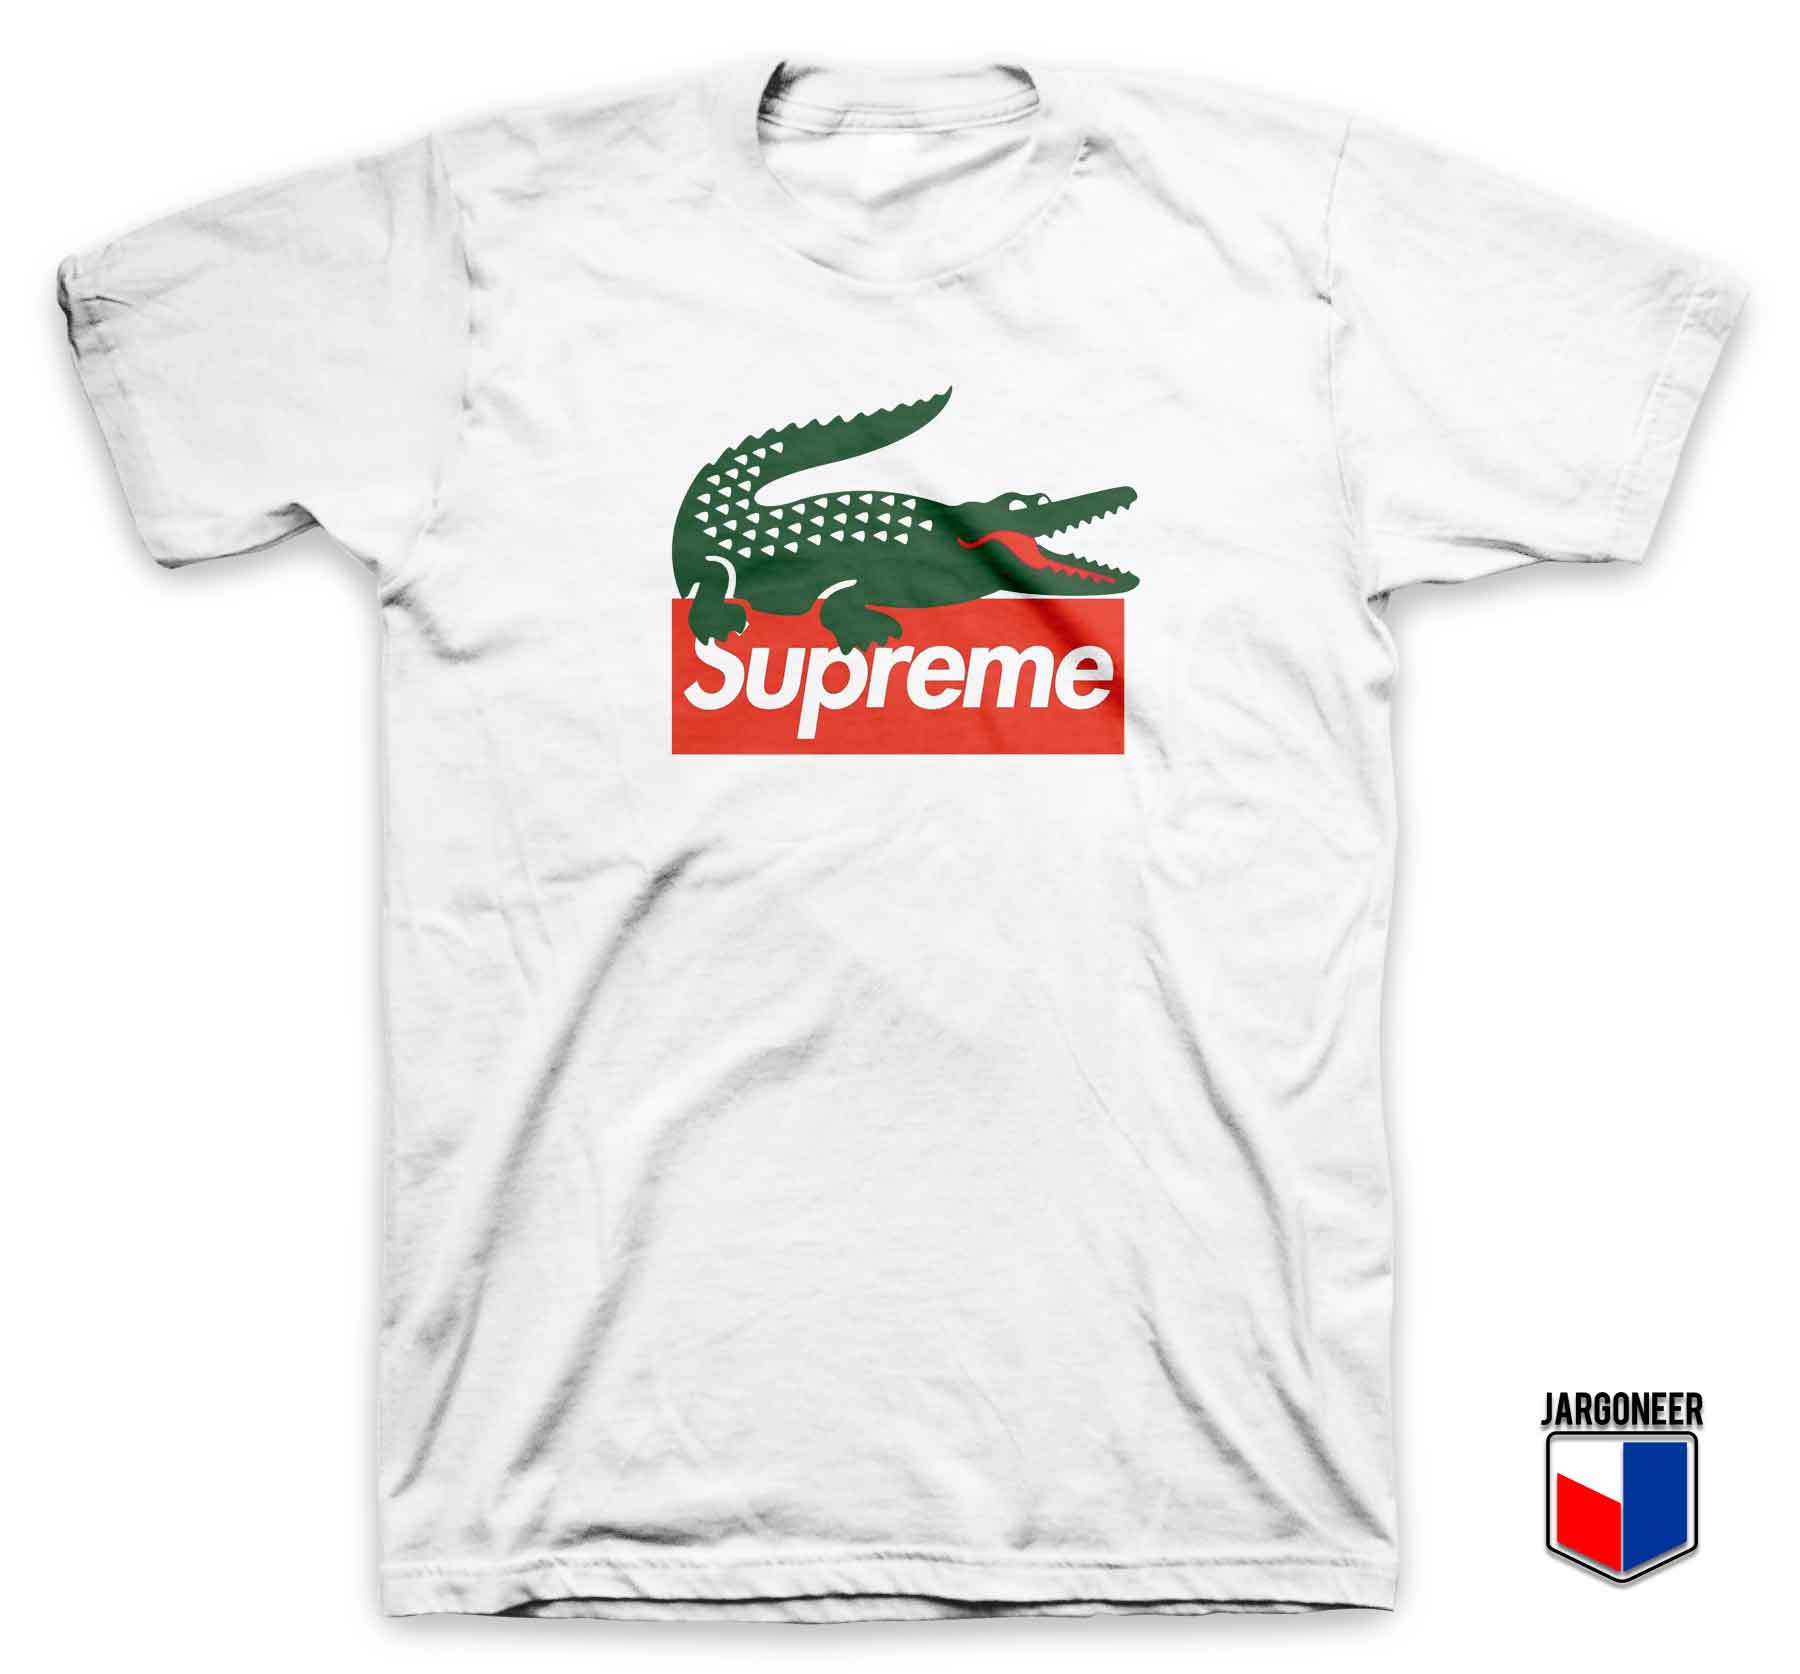 Supreme Crocodile - Shop Unique Graphic Cool Shirt Designs